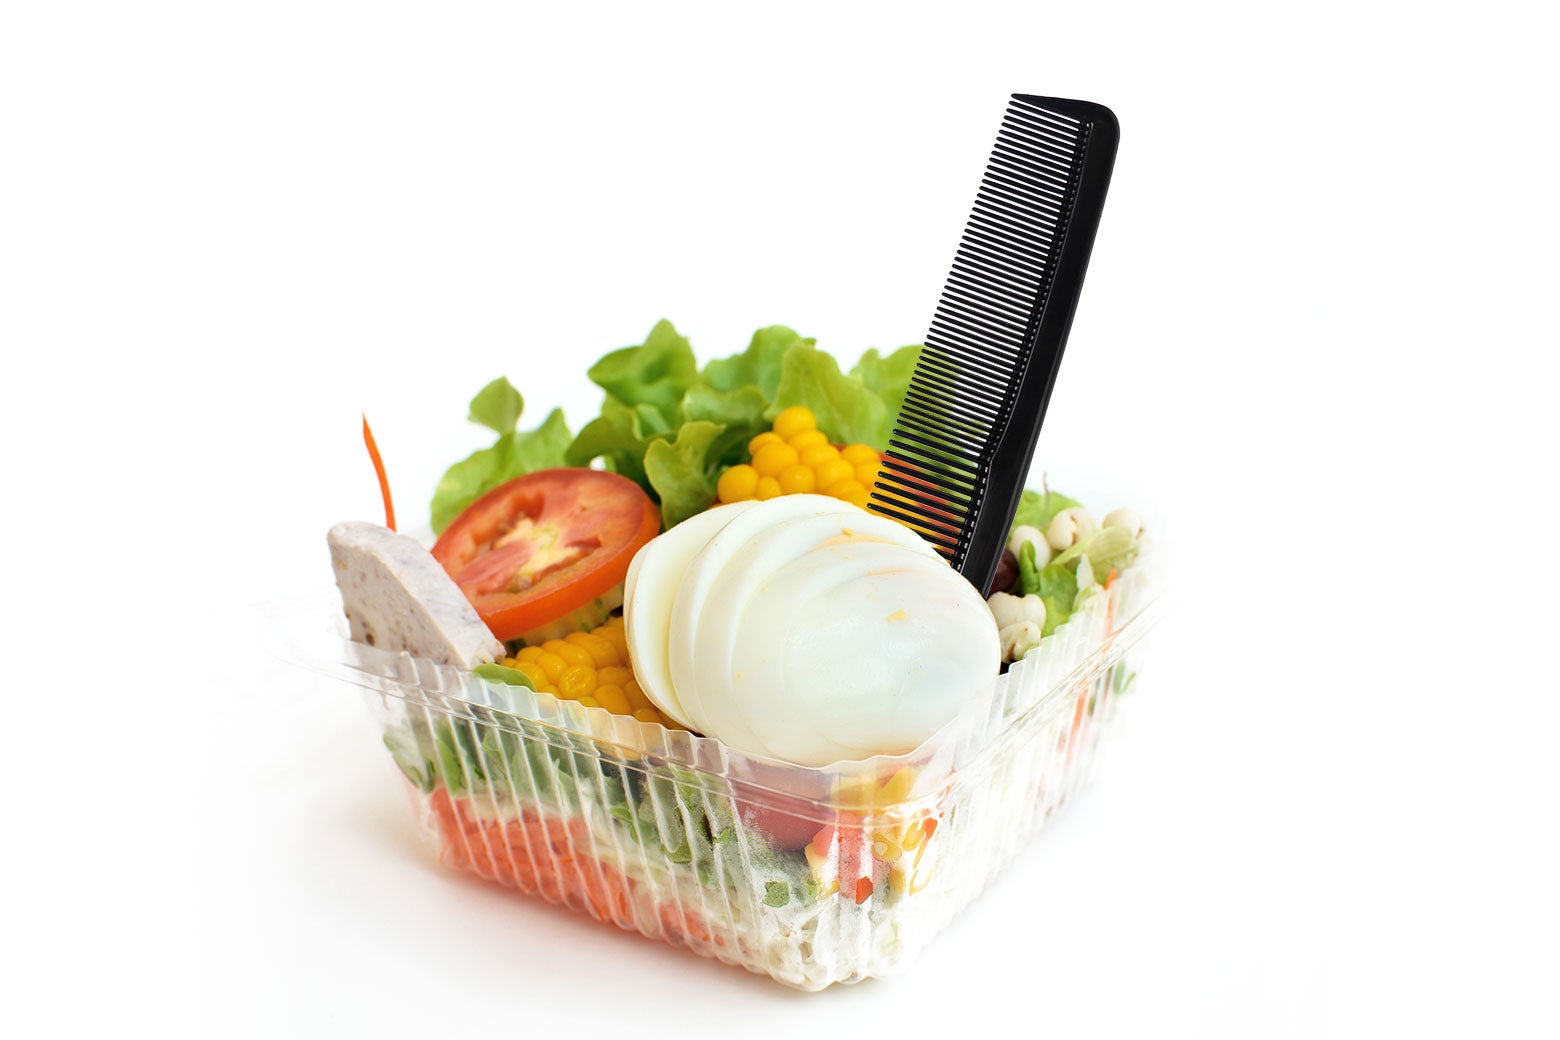 A salad with a comb